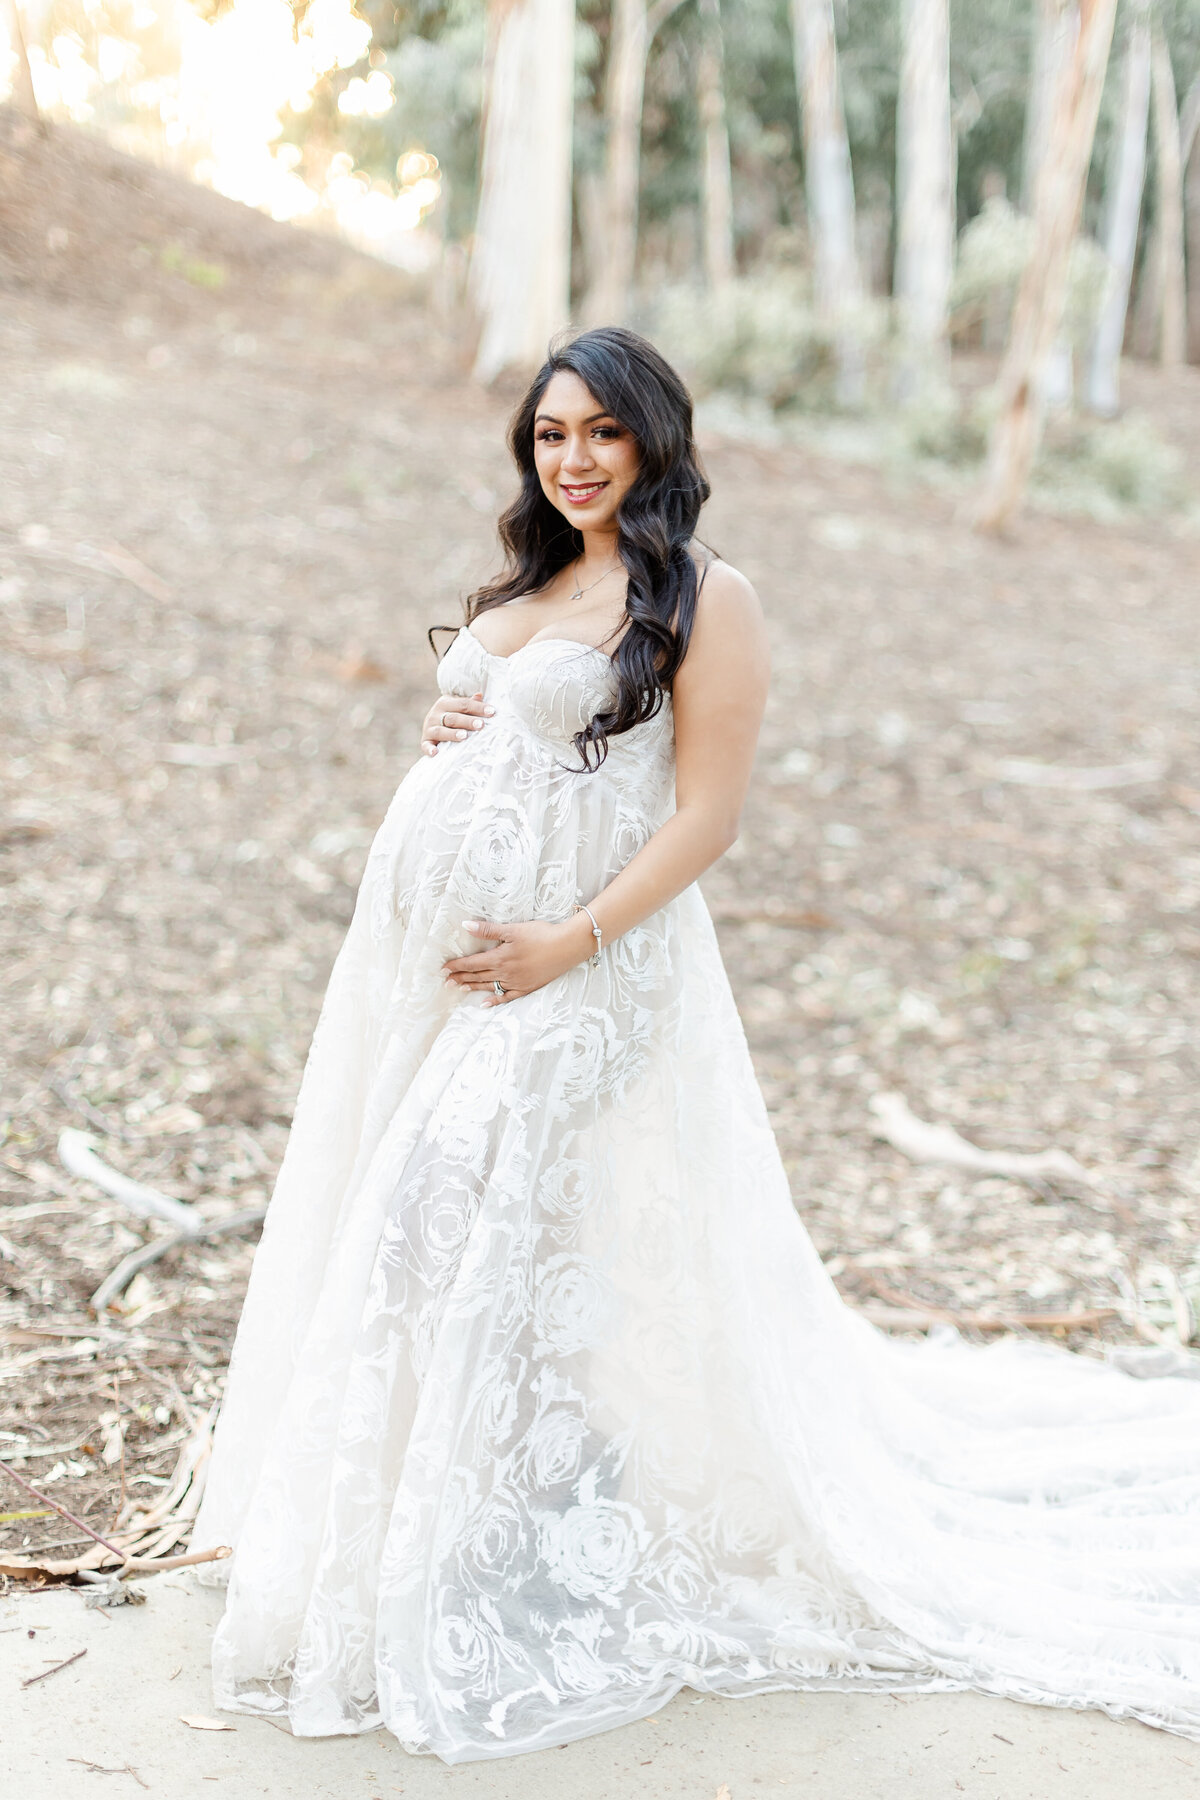 Professional Maternity photographer in Orange County, CA